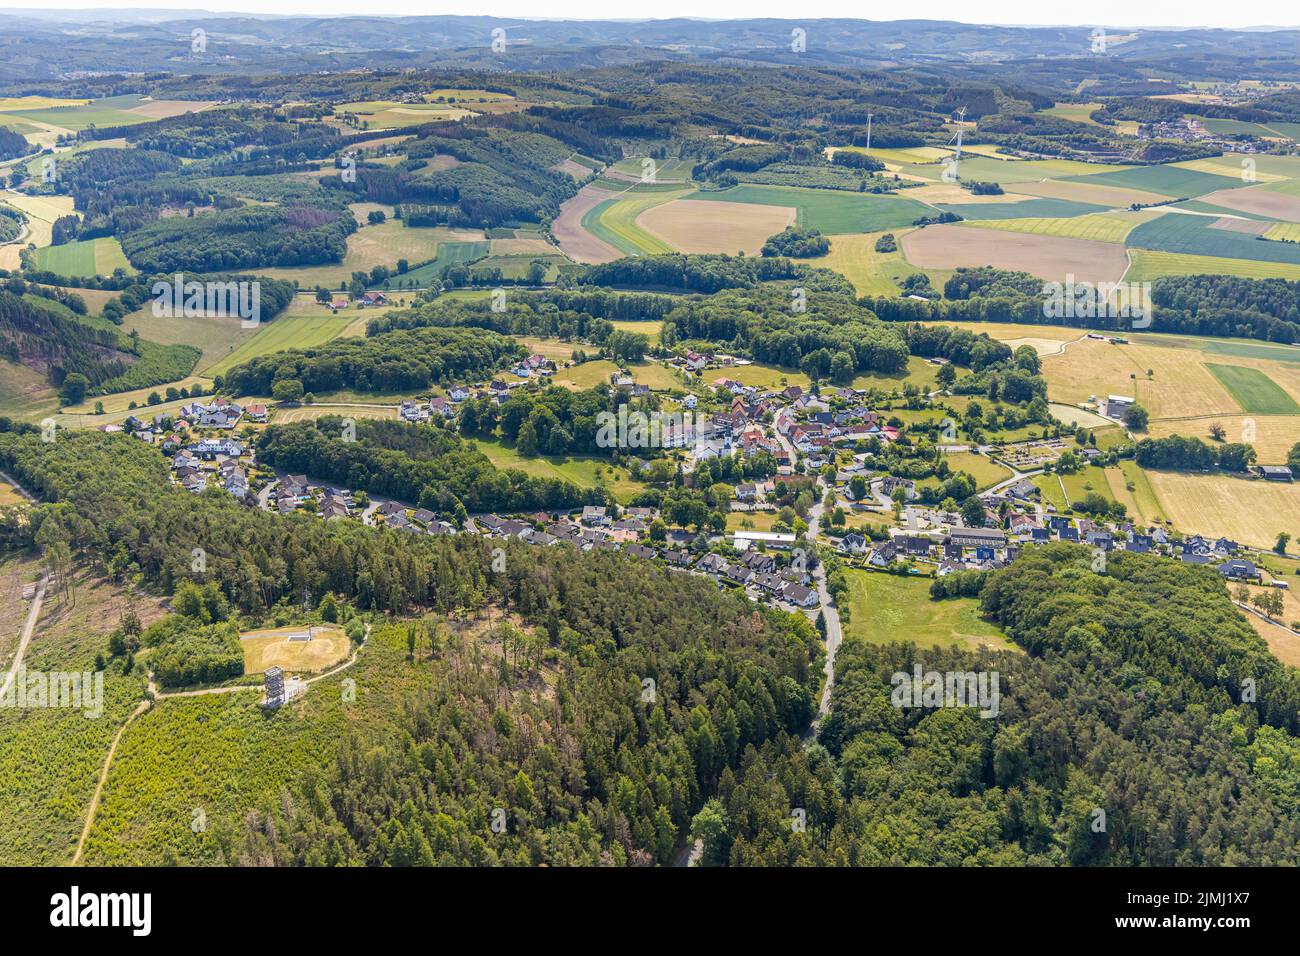 Aerial view, village view district Eisborn, Balve, Sauerland, North Rhine-Westphalia, Germany, DE, village view, Europe, property tax, hilly landscape Stock Photo